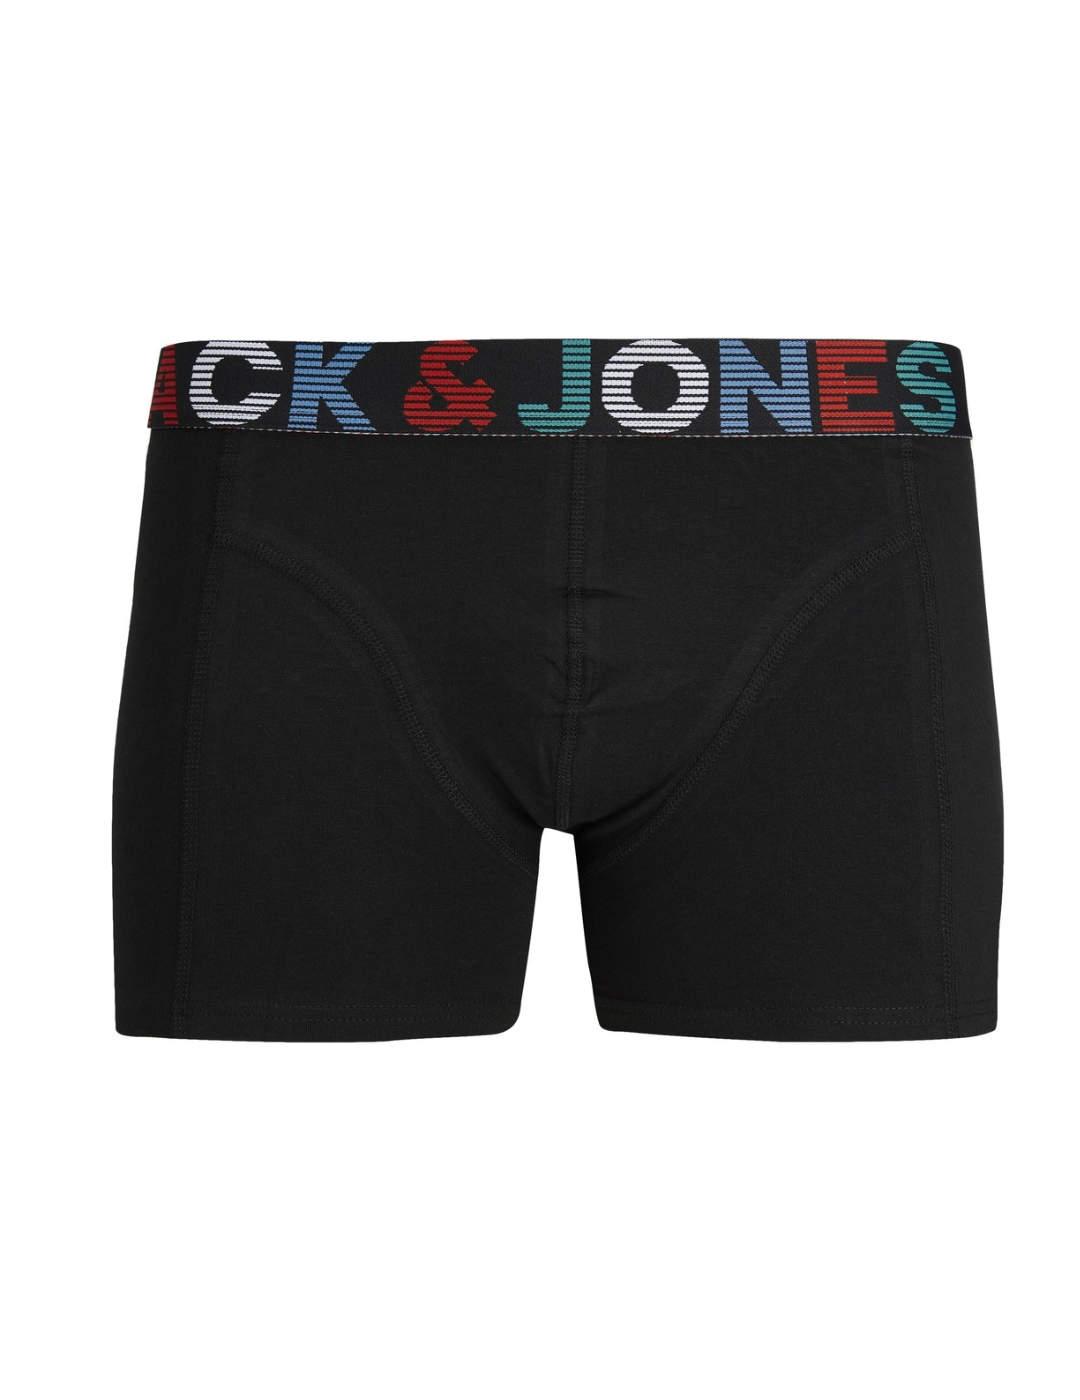 Intimo Jack&Jones pack3 negro para hombre-&